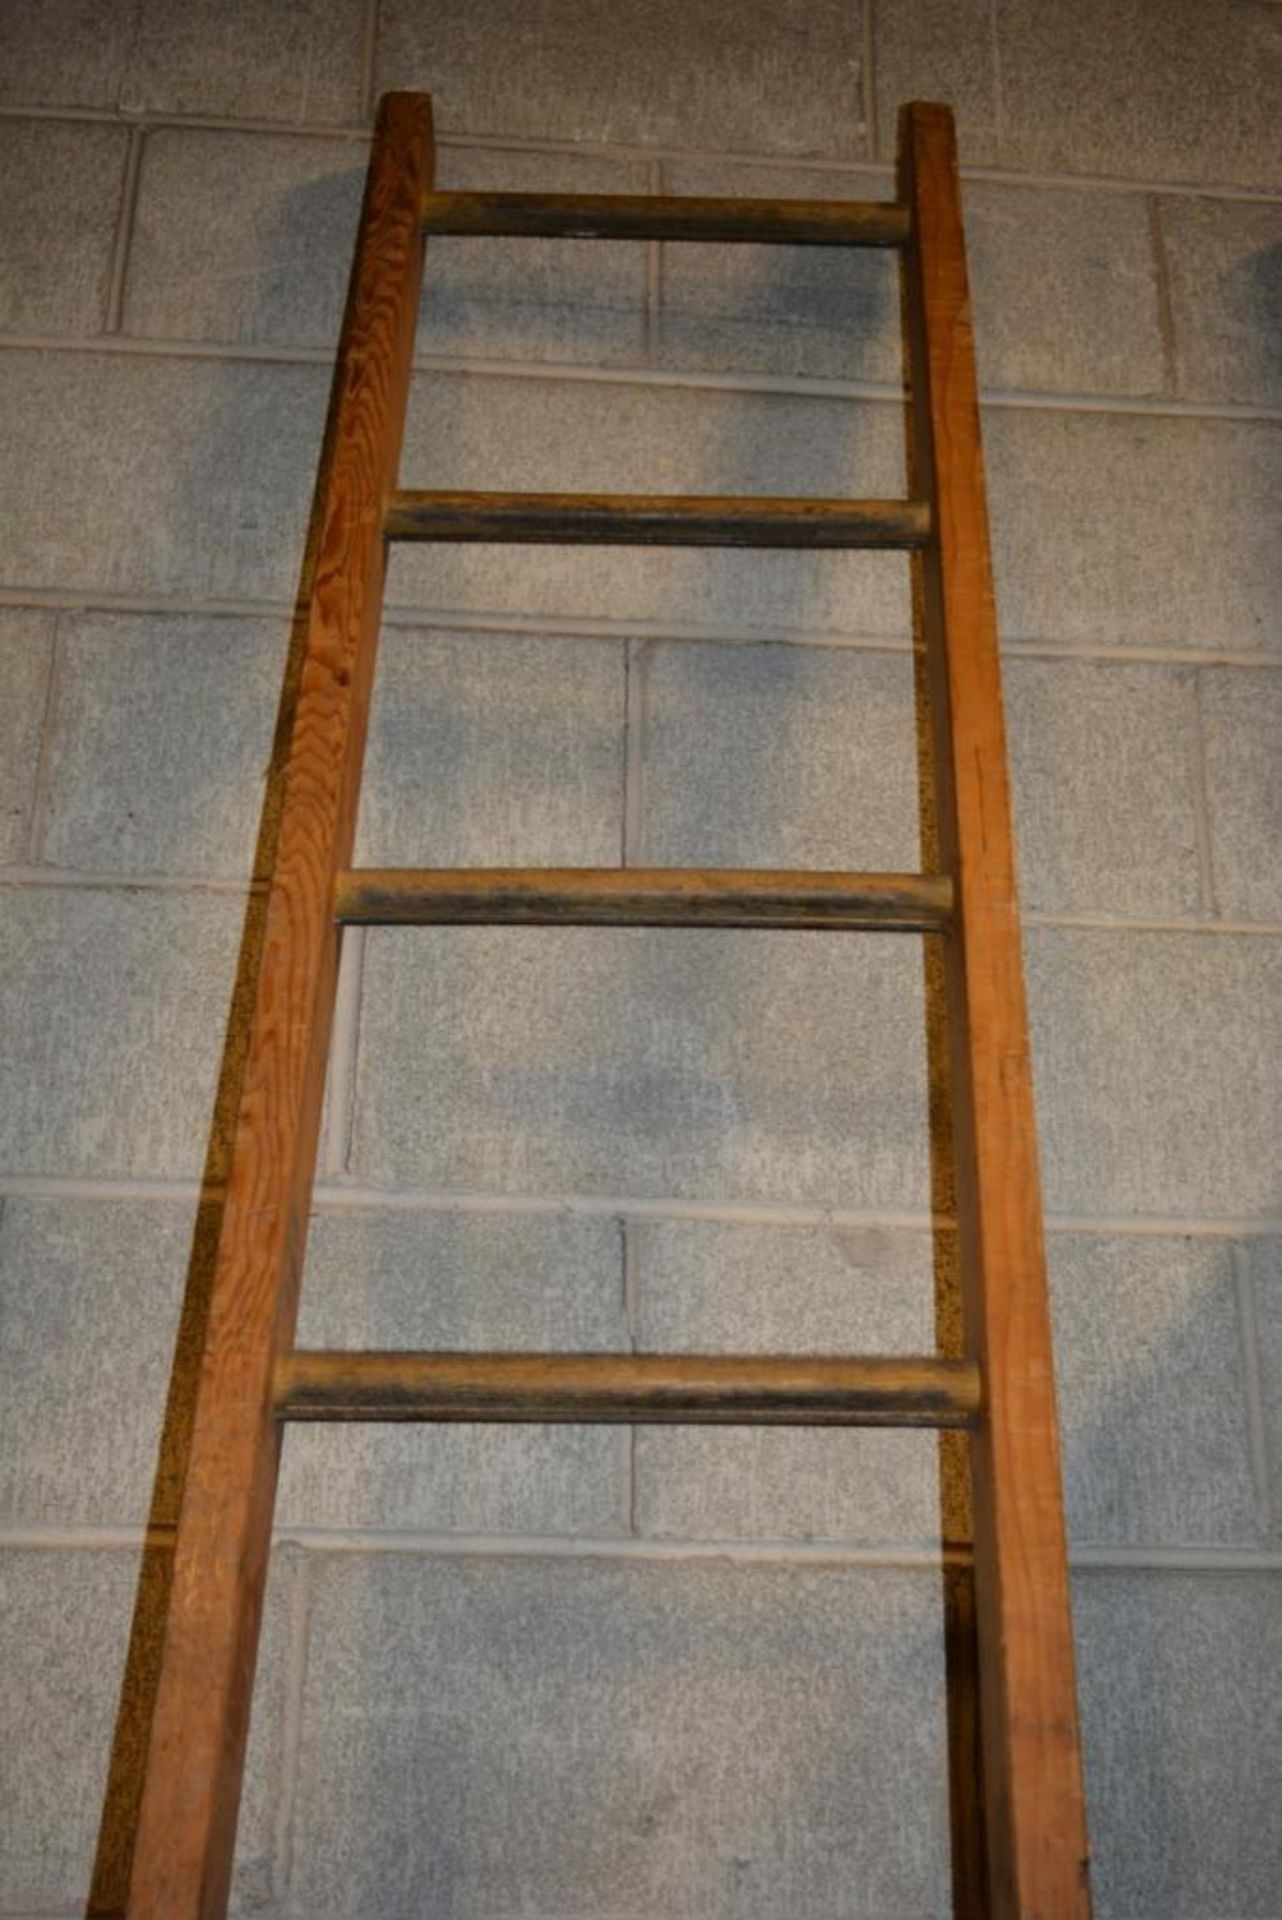 Watling SI-10 10' Wood Straight Ladder - Image 4 of 4